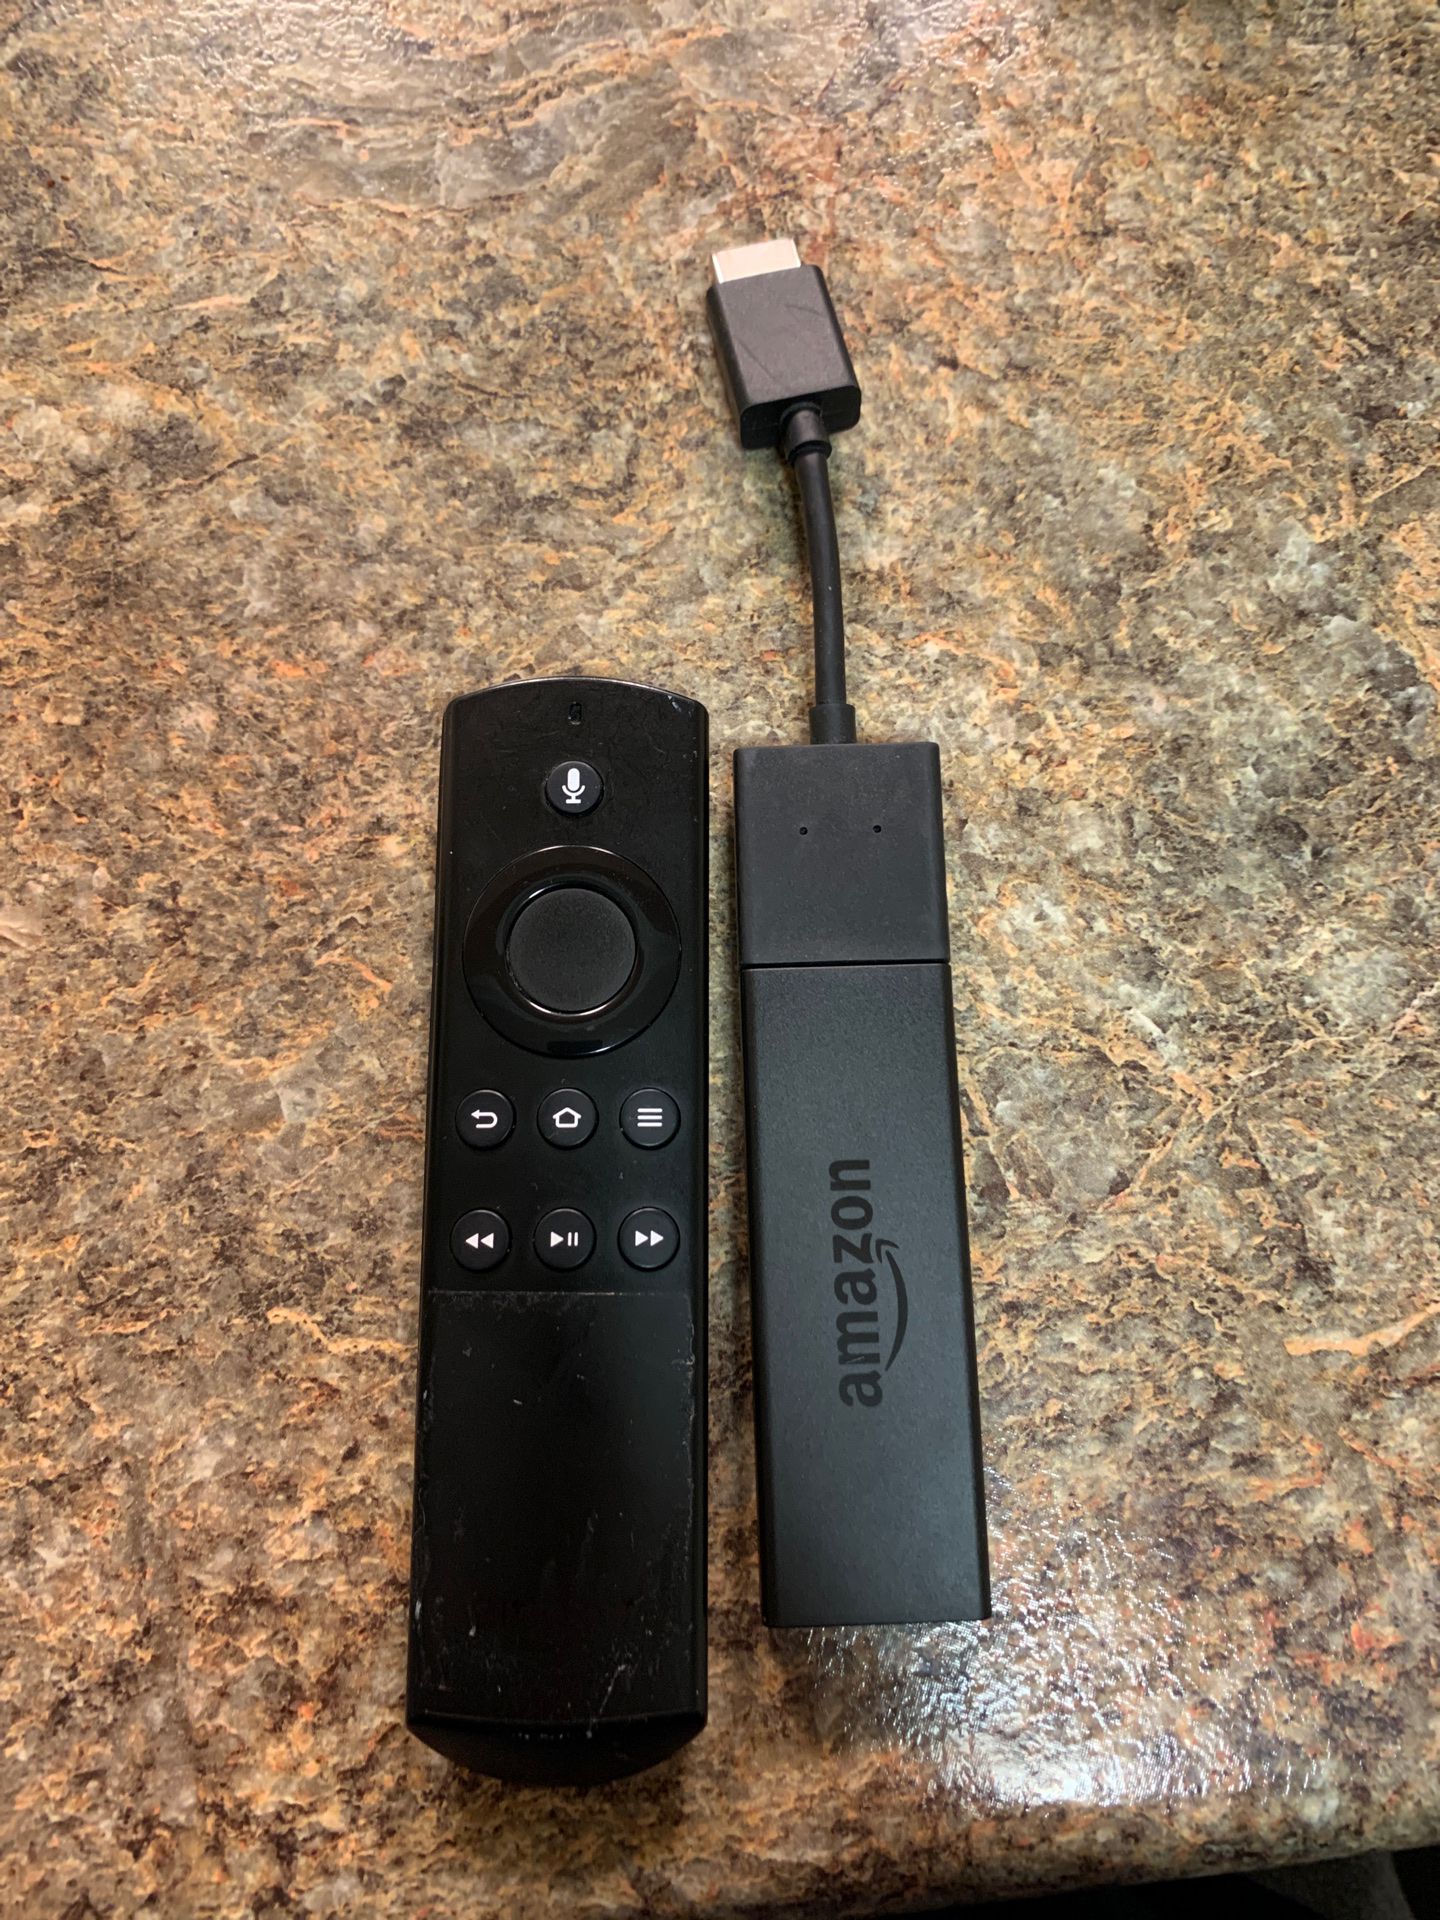 Amazon Fire TV Stick (2nd Gen)